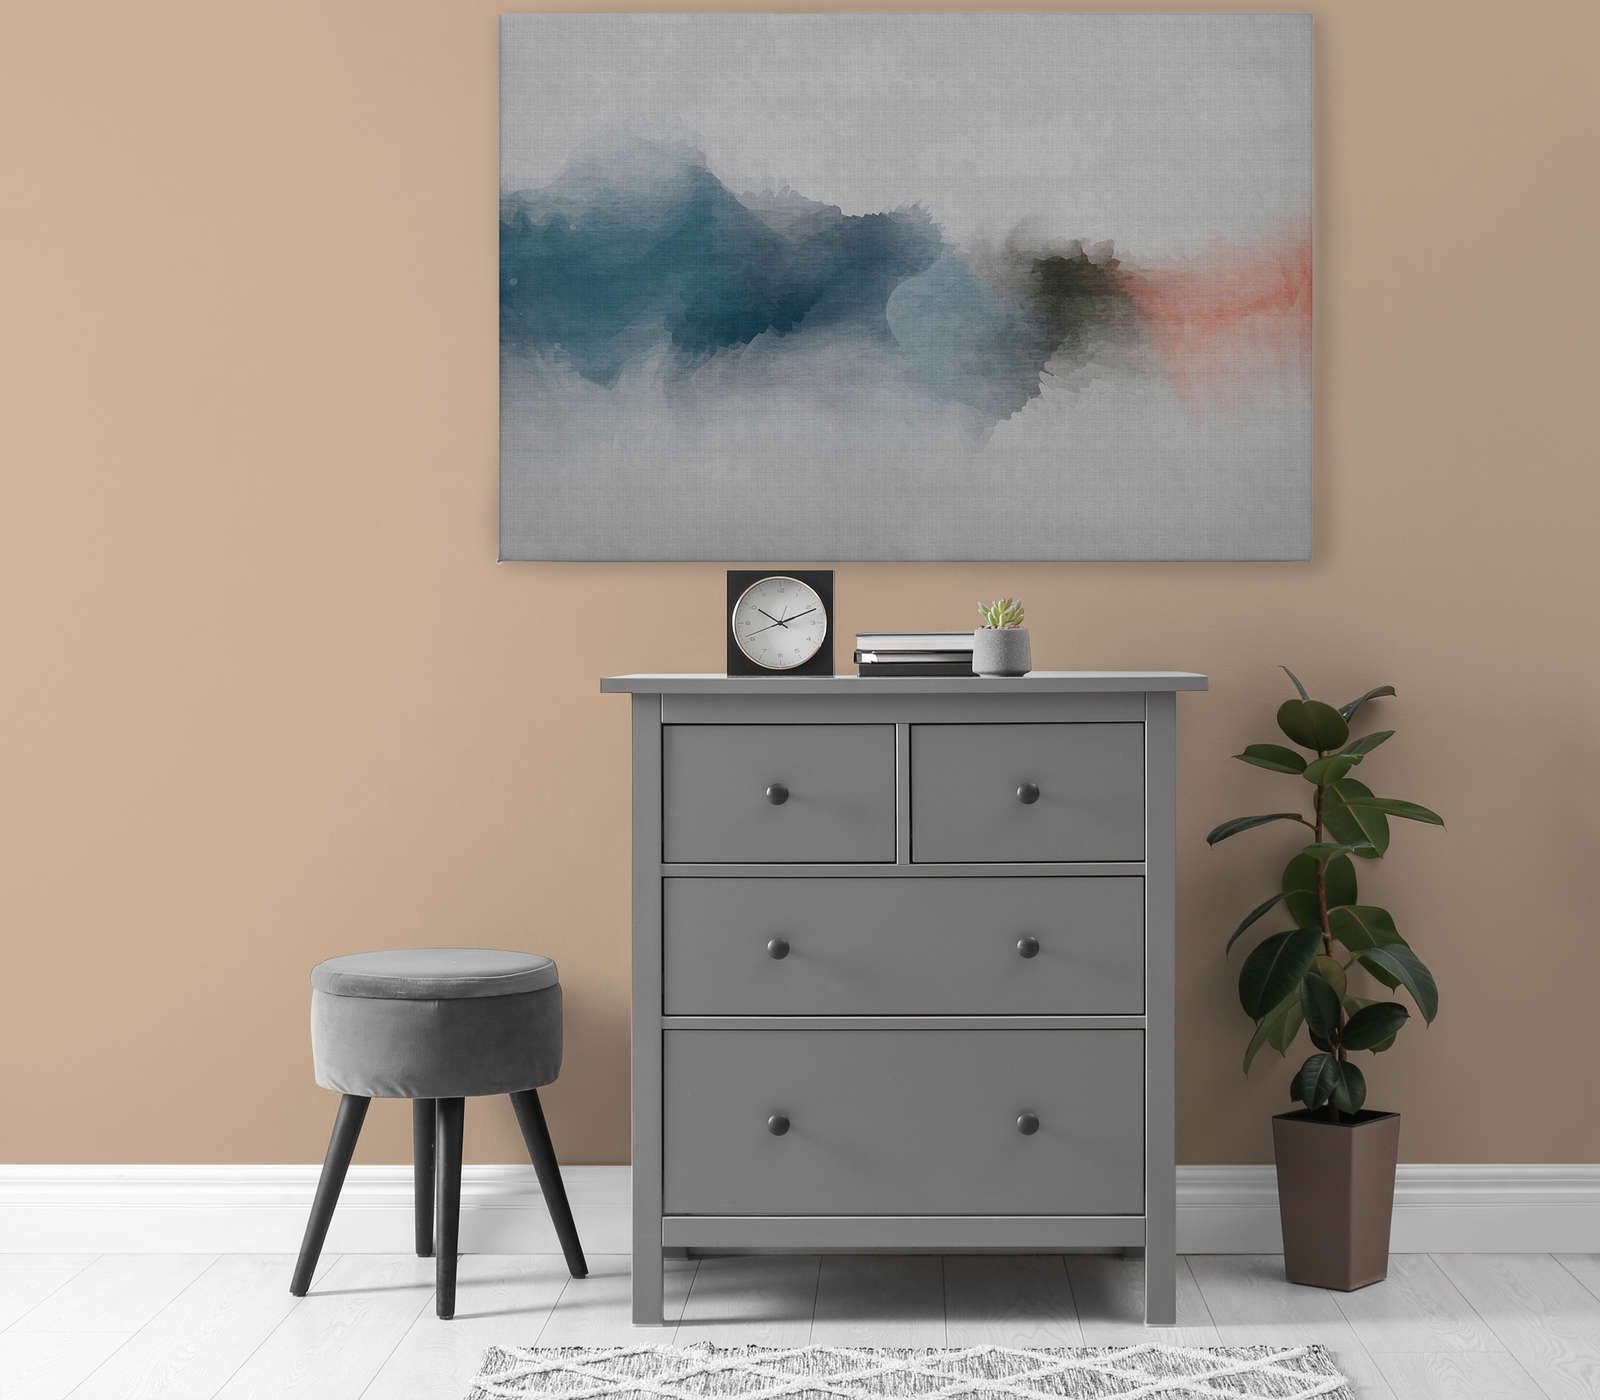             Daydream 1 - Toile minimaliste style aquarelle - aspect lin naturel - 1,20 m x 0,80 m
        